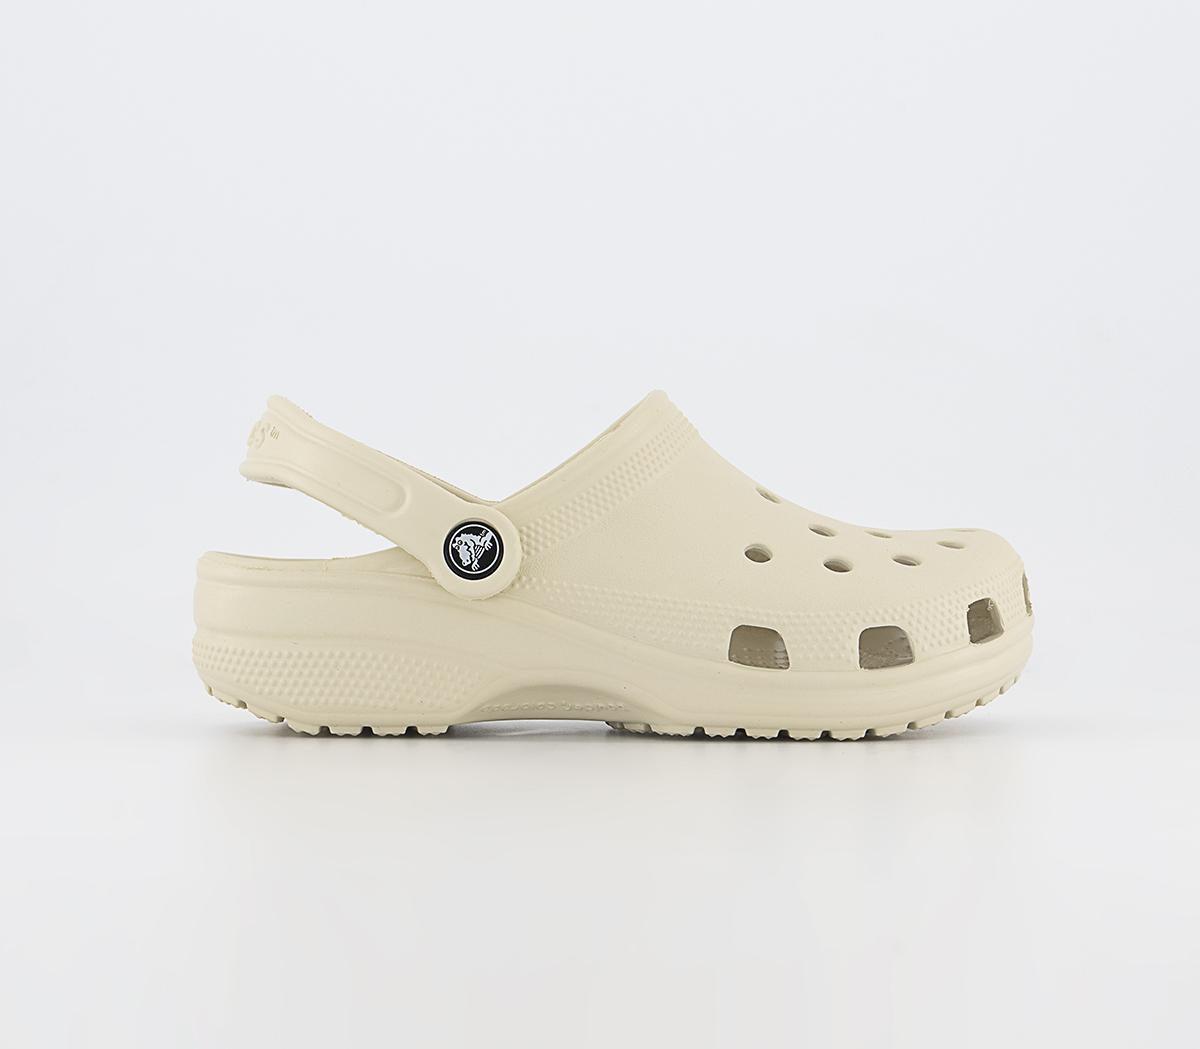 Crocs Clogs Bone - Flat Shoes for Women